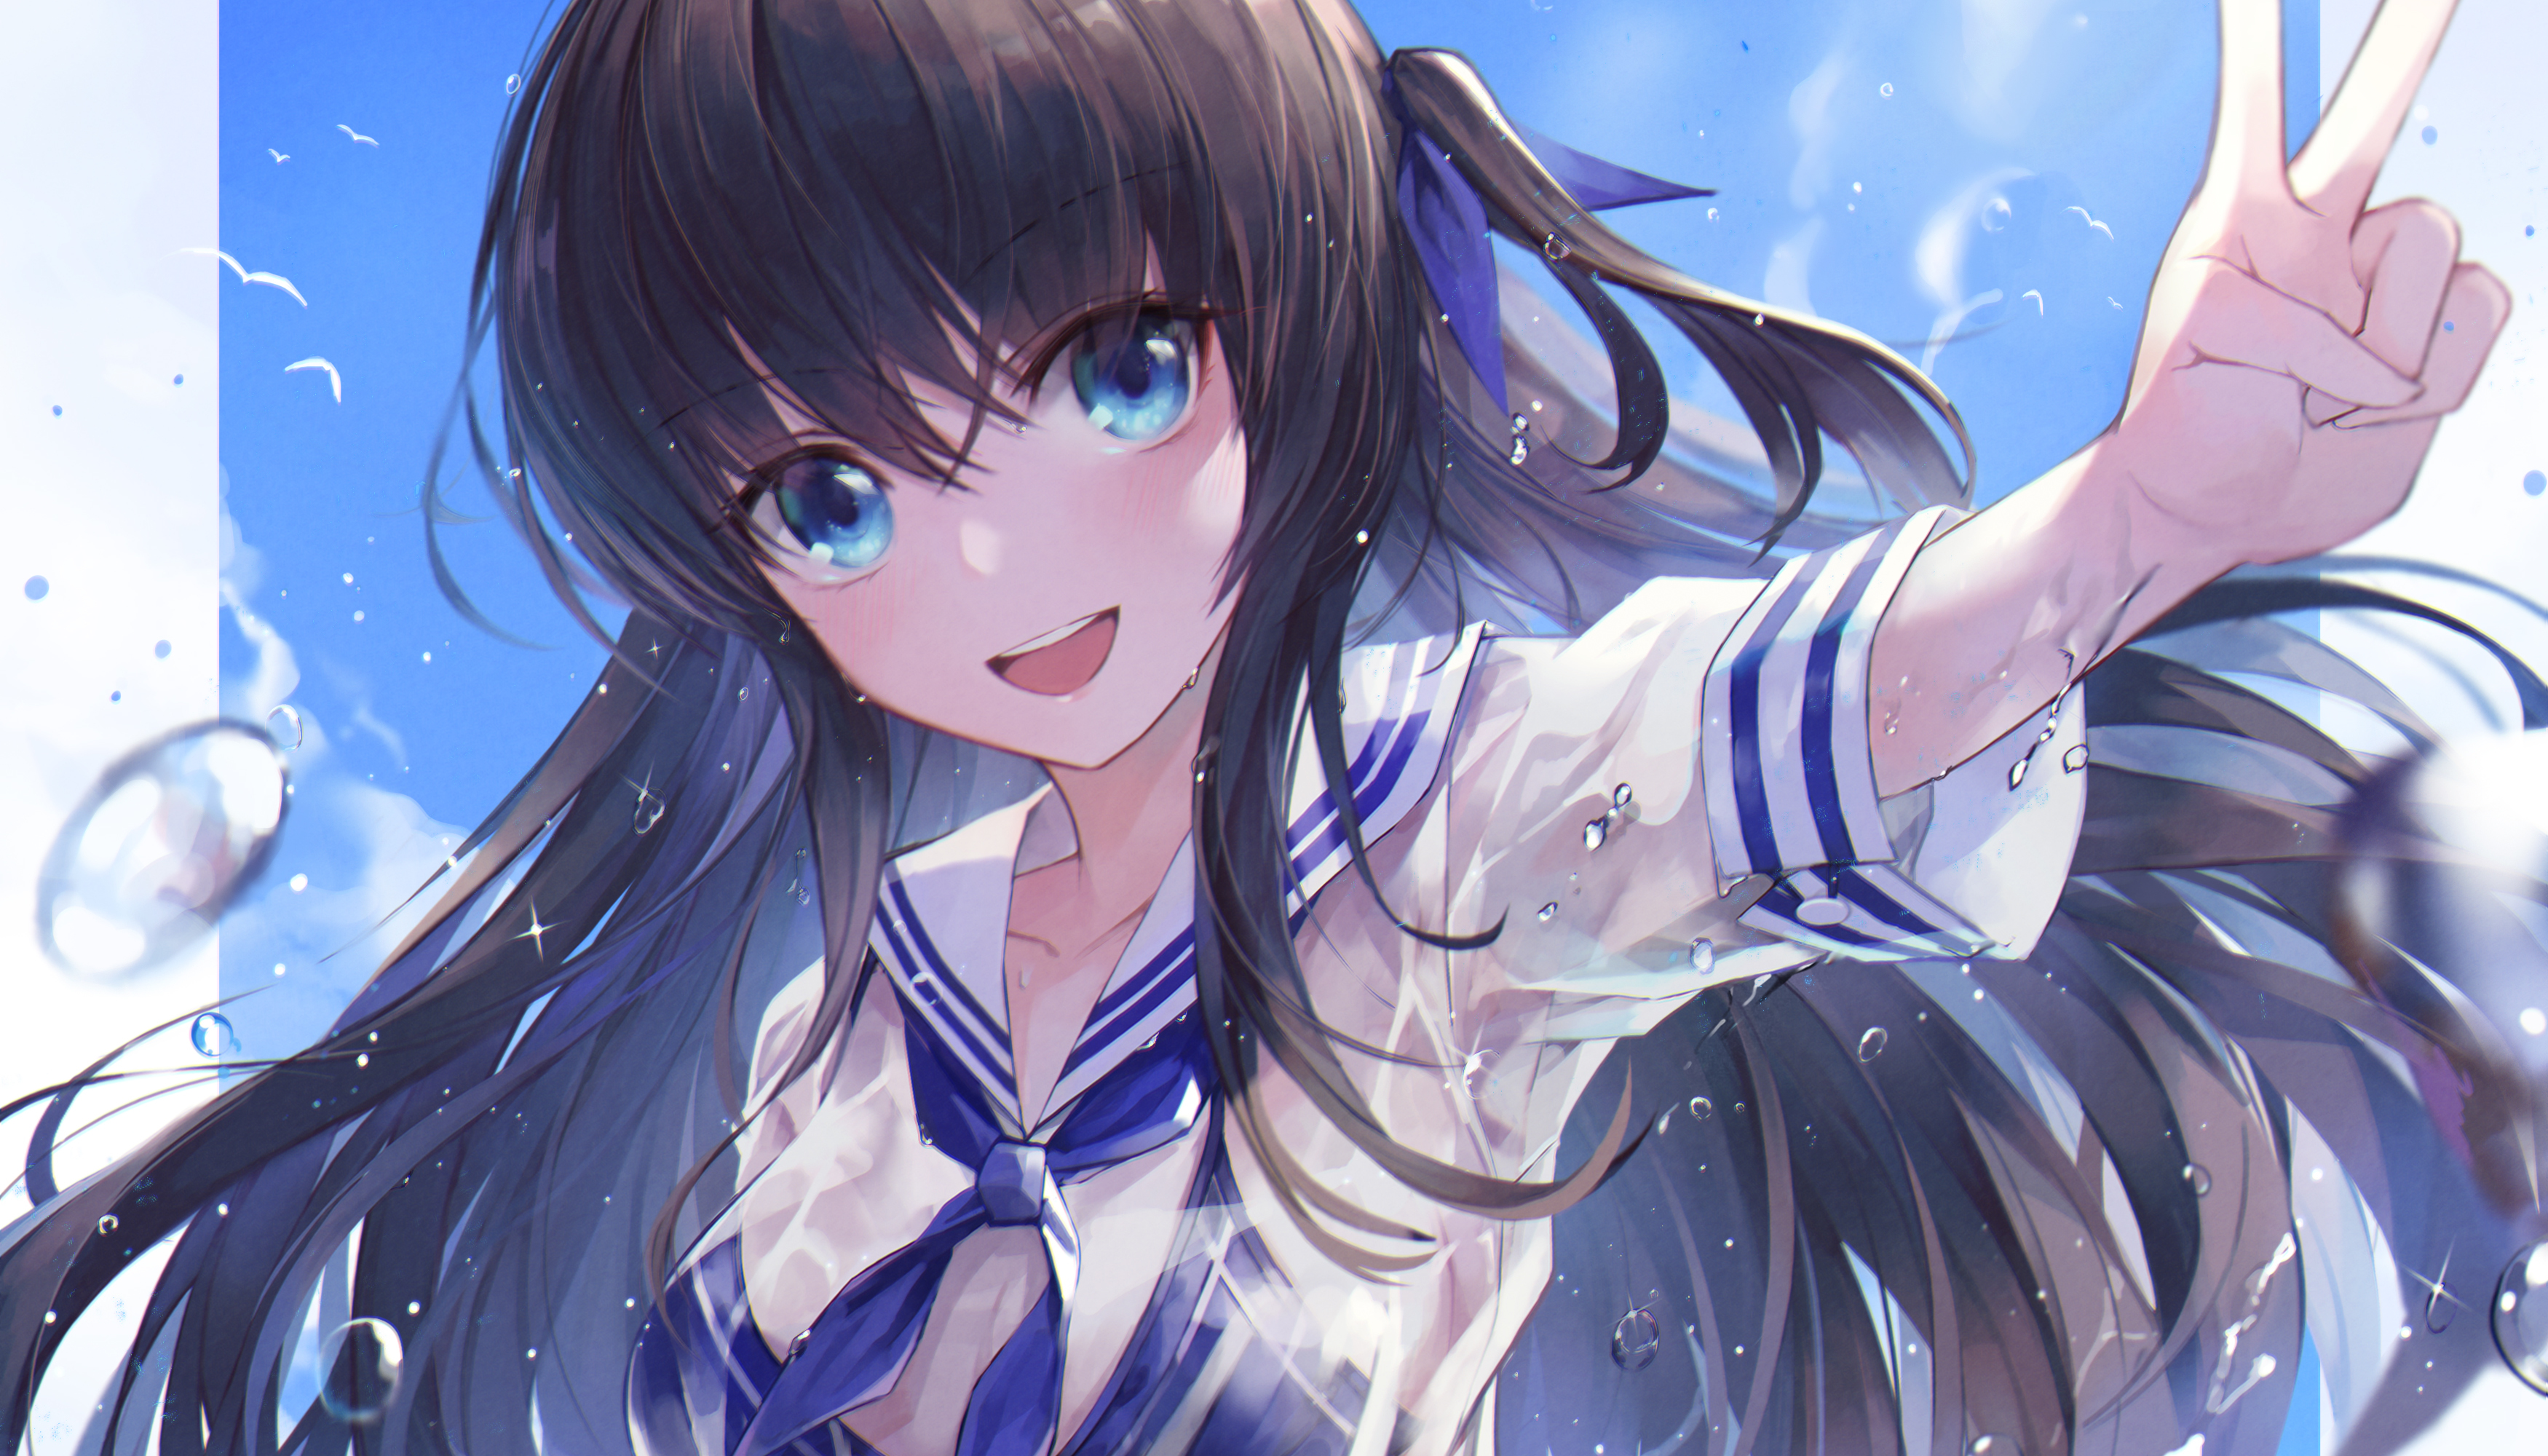 Anime 3500x2000 anime 2D digital art anime girls black hair blue eyes smiling school uniform wet see-through clothing CrystalHerb